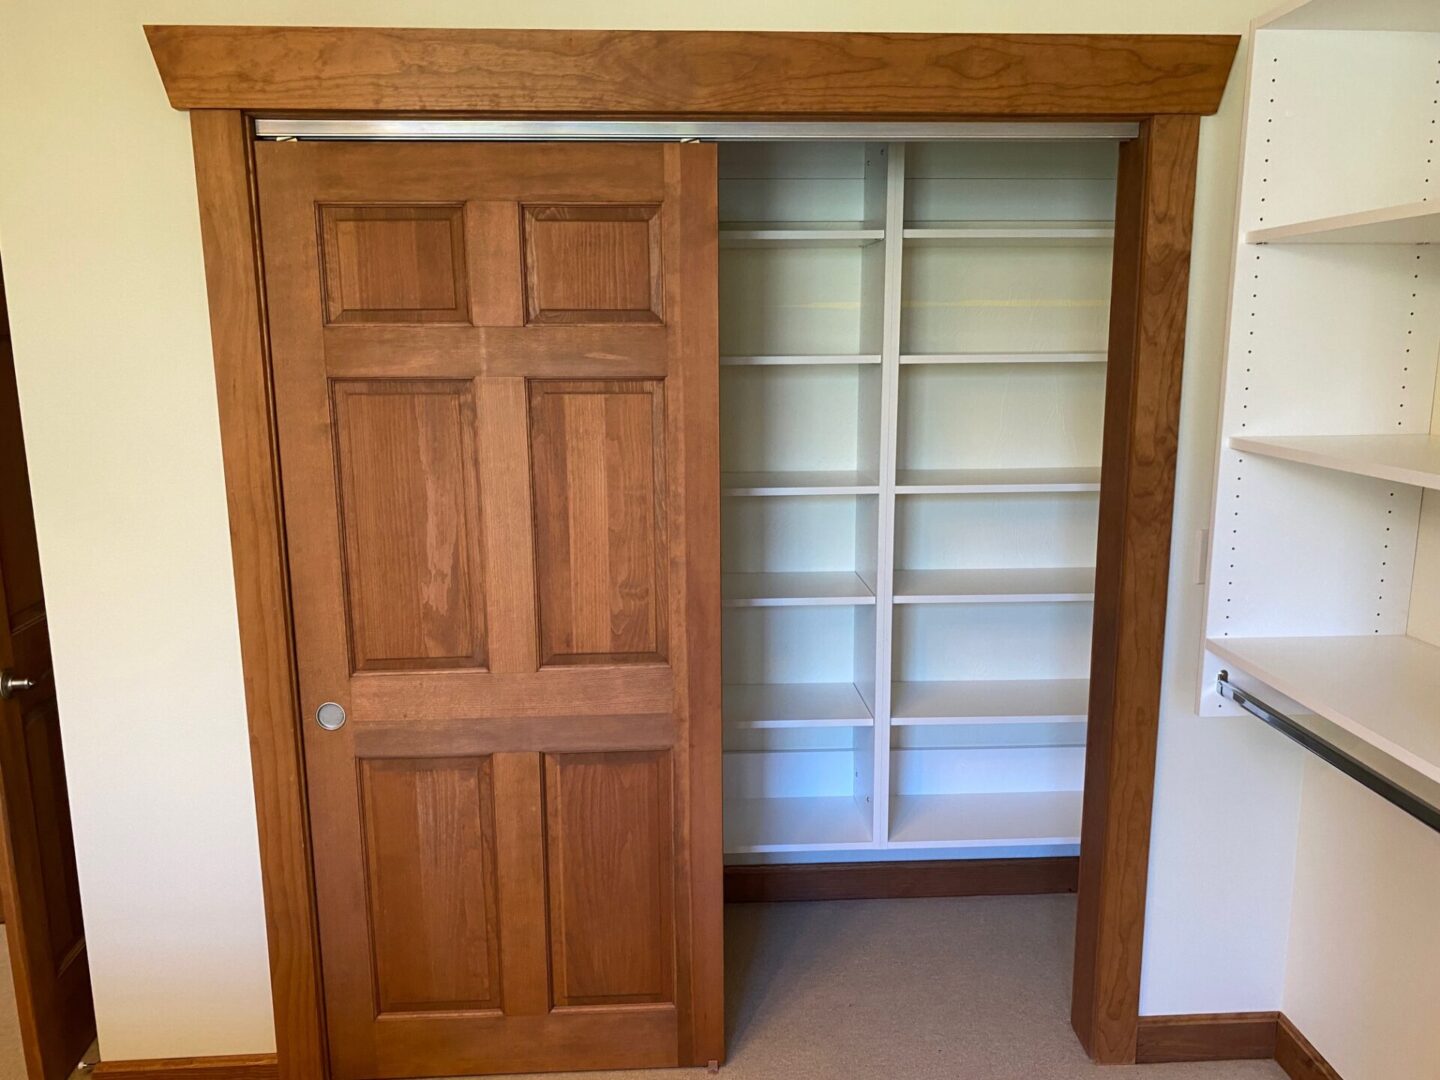 A Wooden Sliding Door for a Closet Space